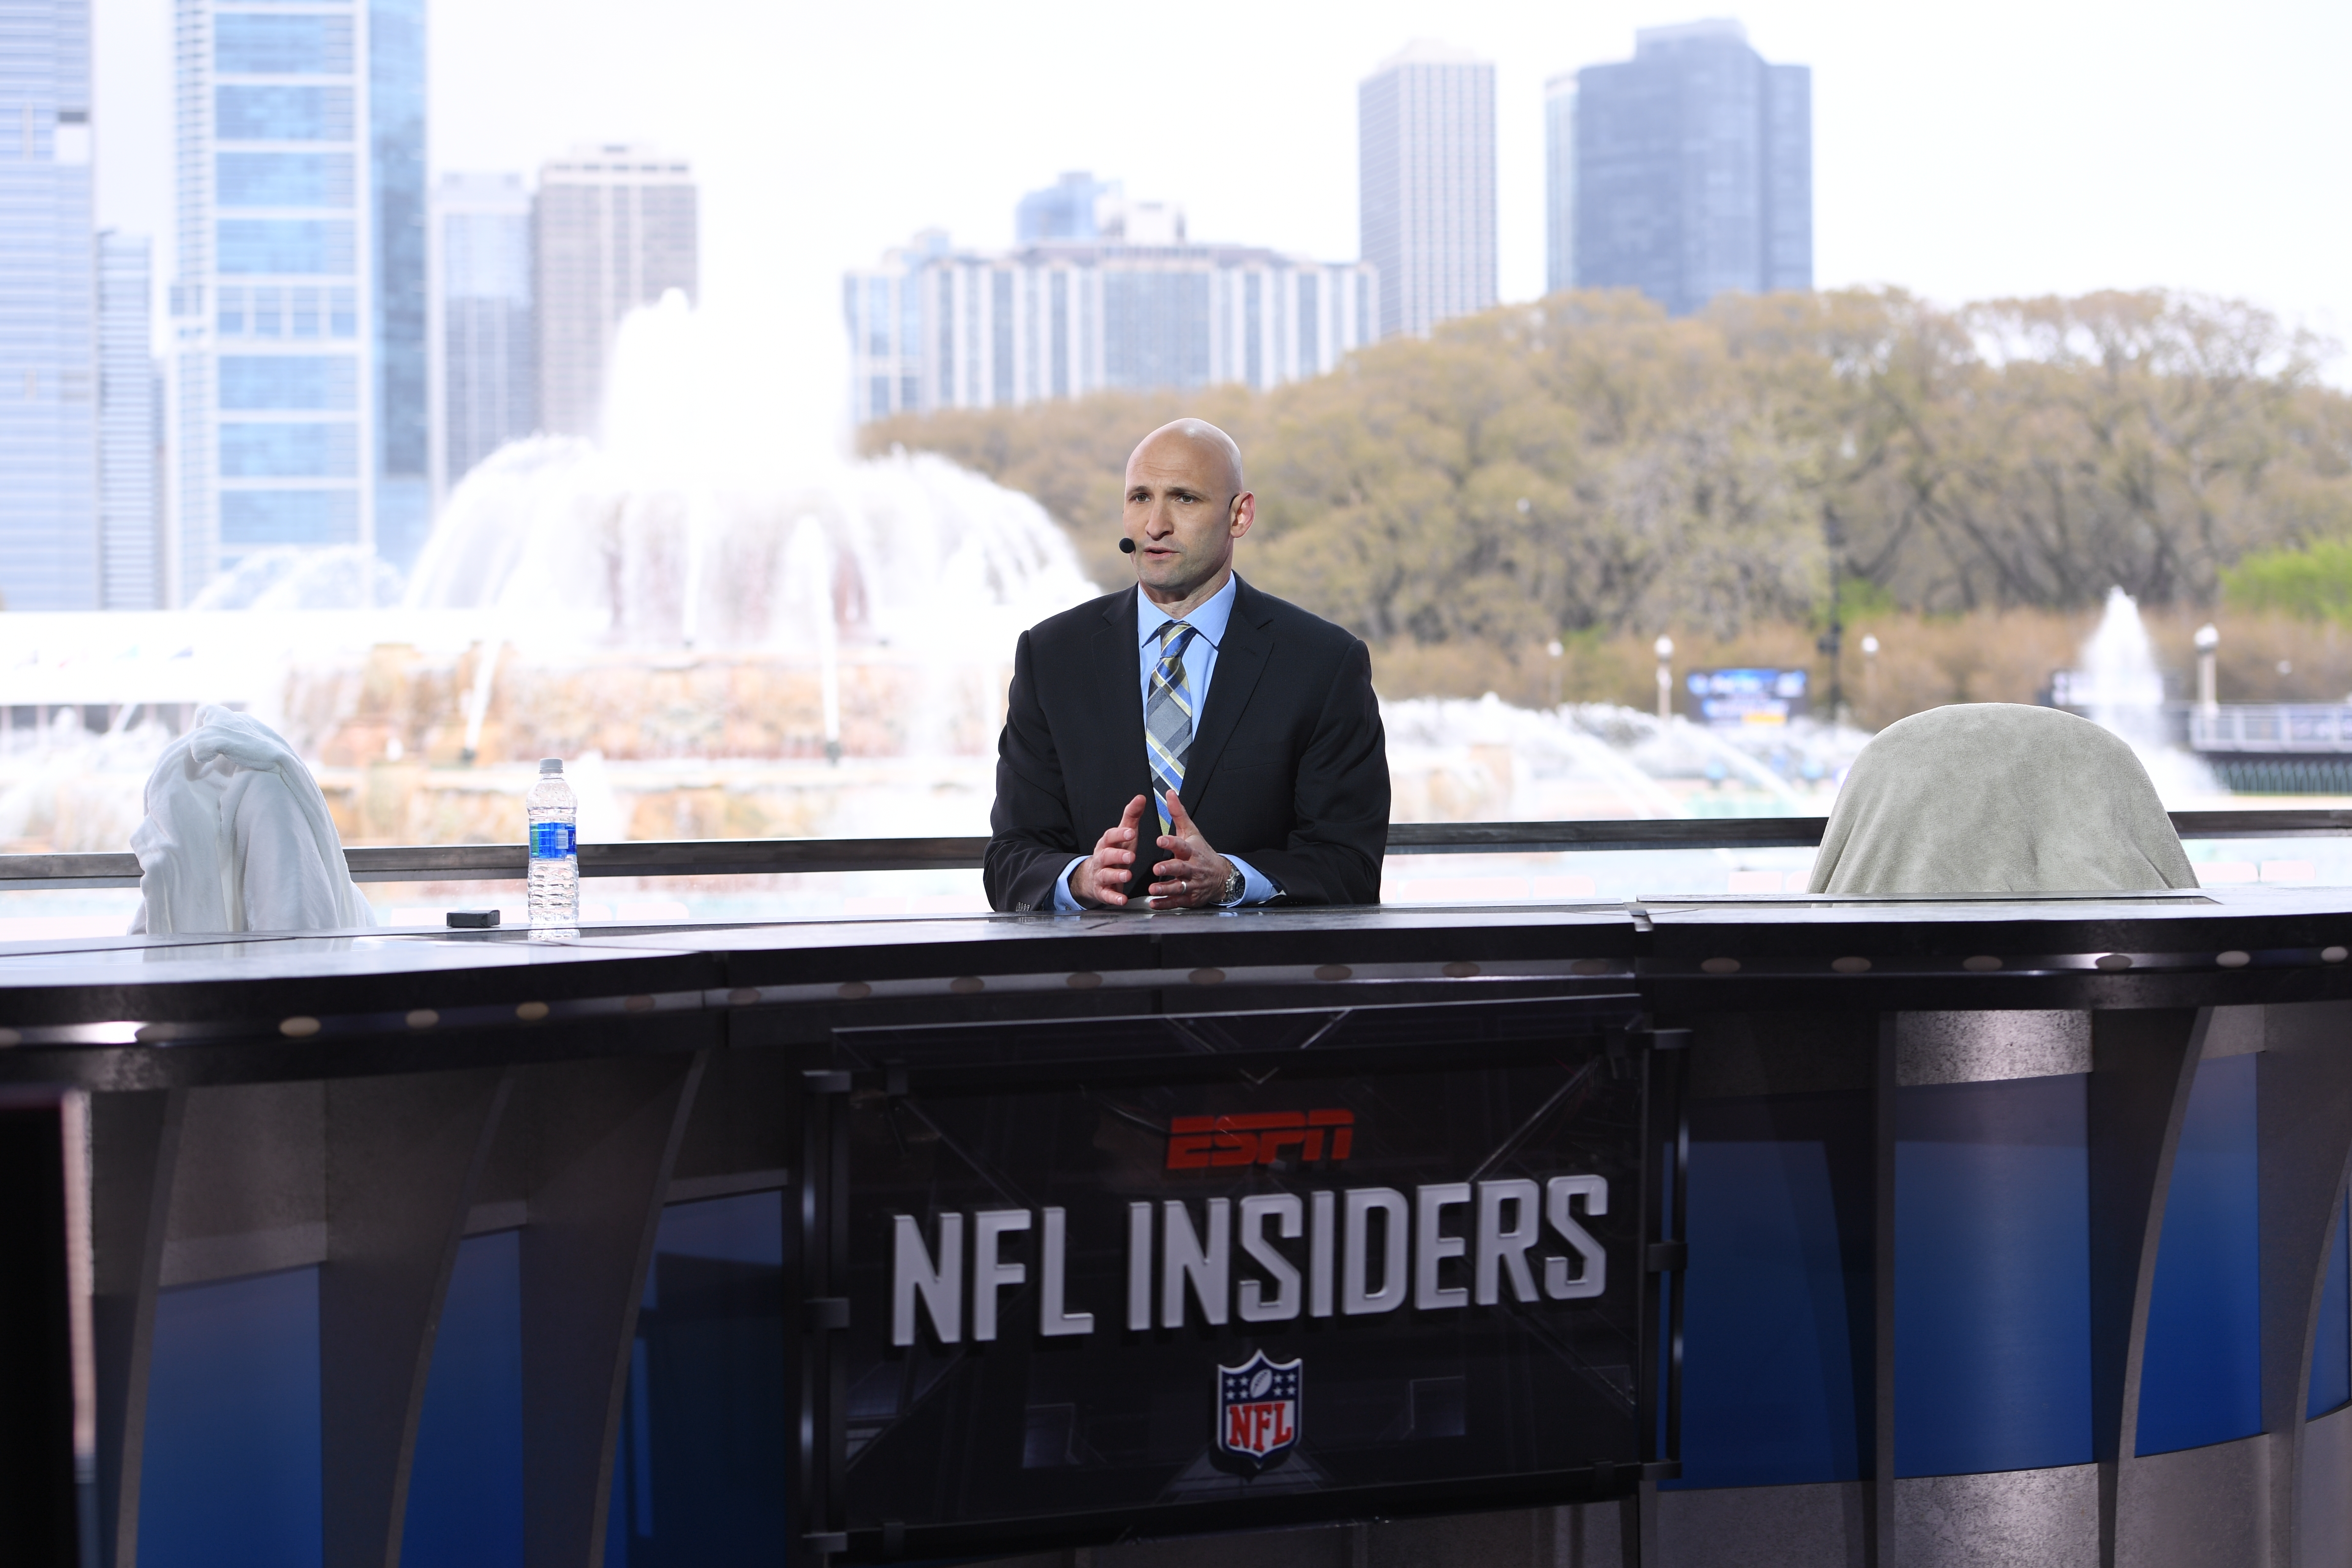 Matt Bowen on NFL Insiders during the 2016 NFL Draft. (Joe Faraoni/ESPN Images)